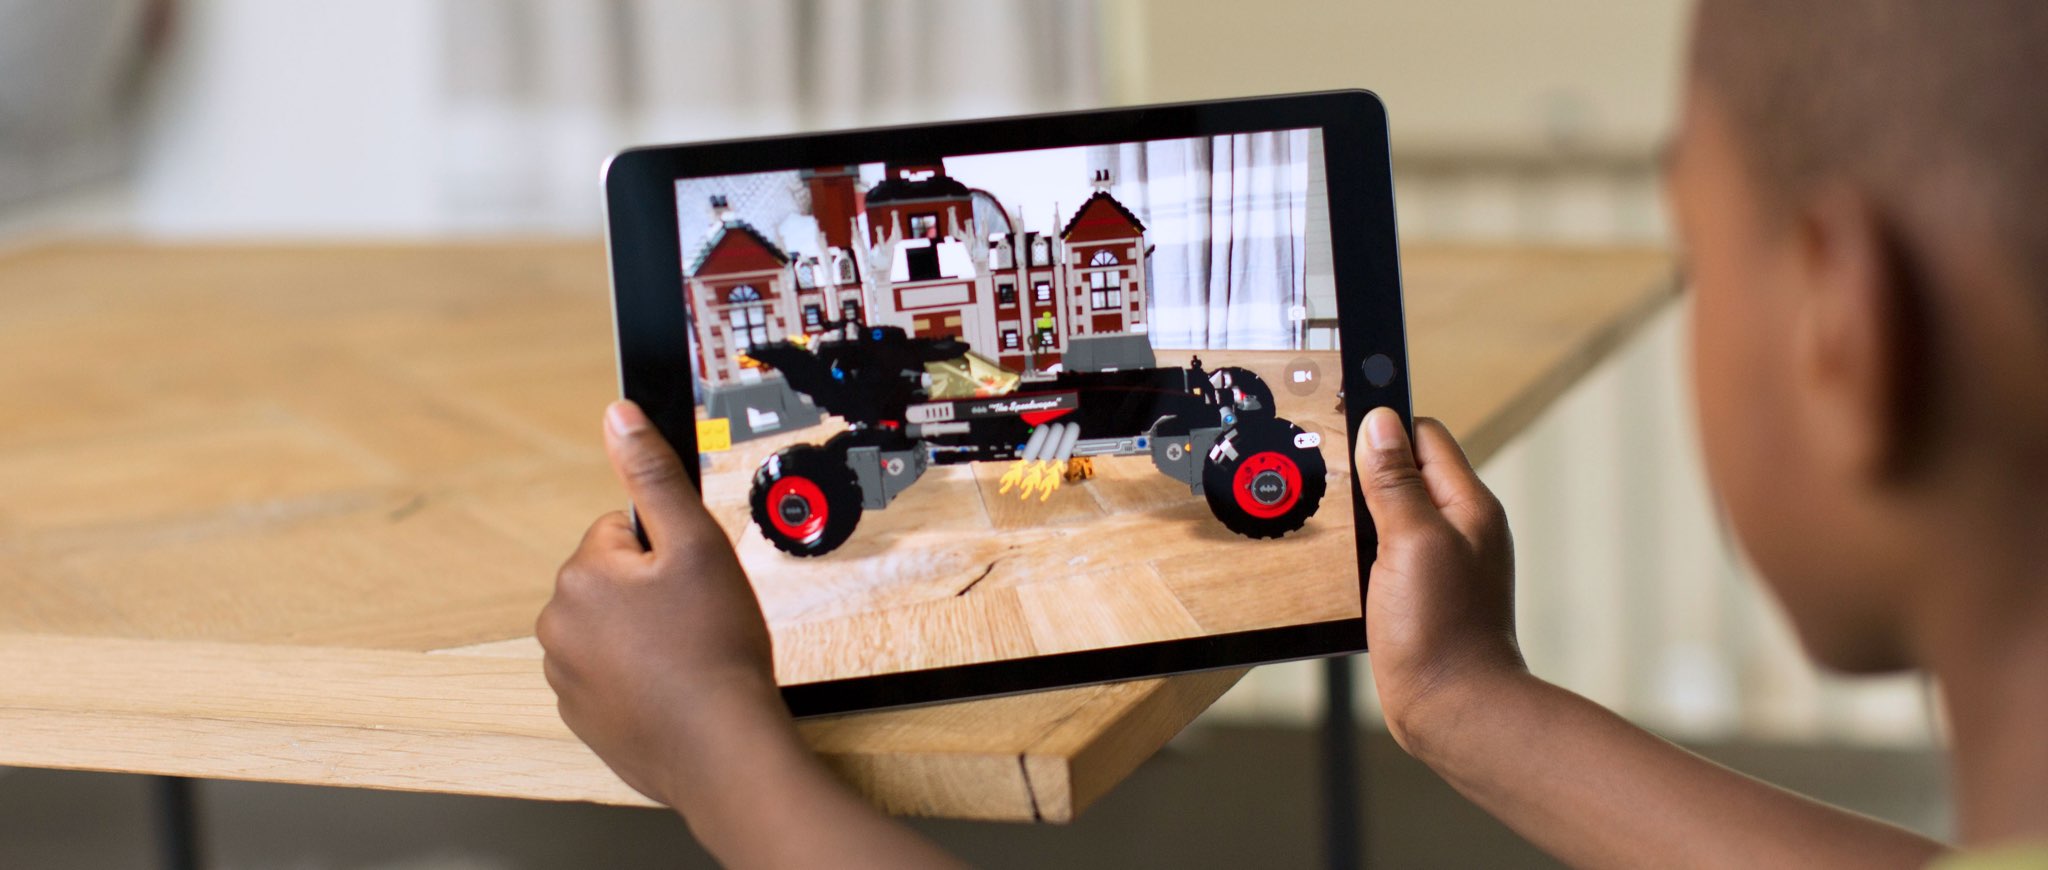 Apple ARKit teaser iPad augmented reality image 001